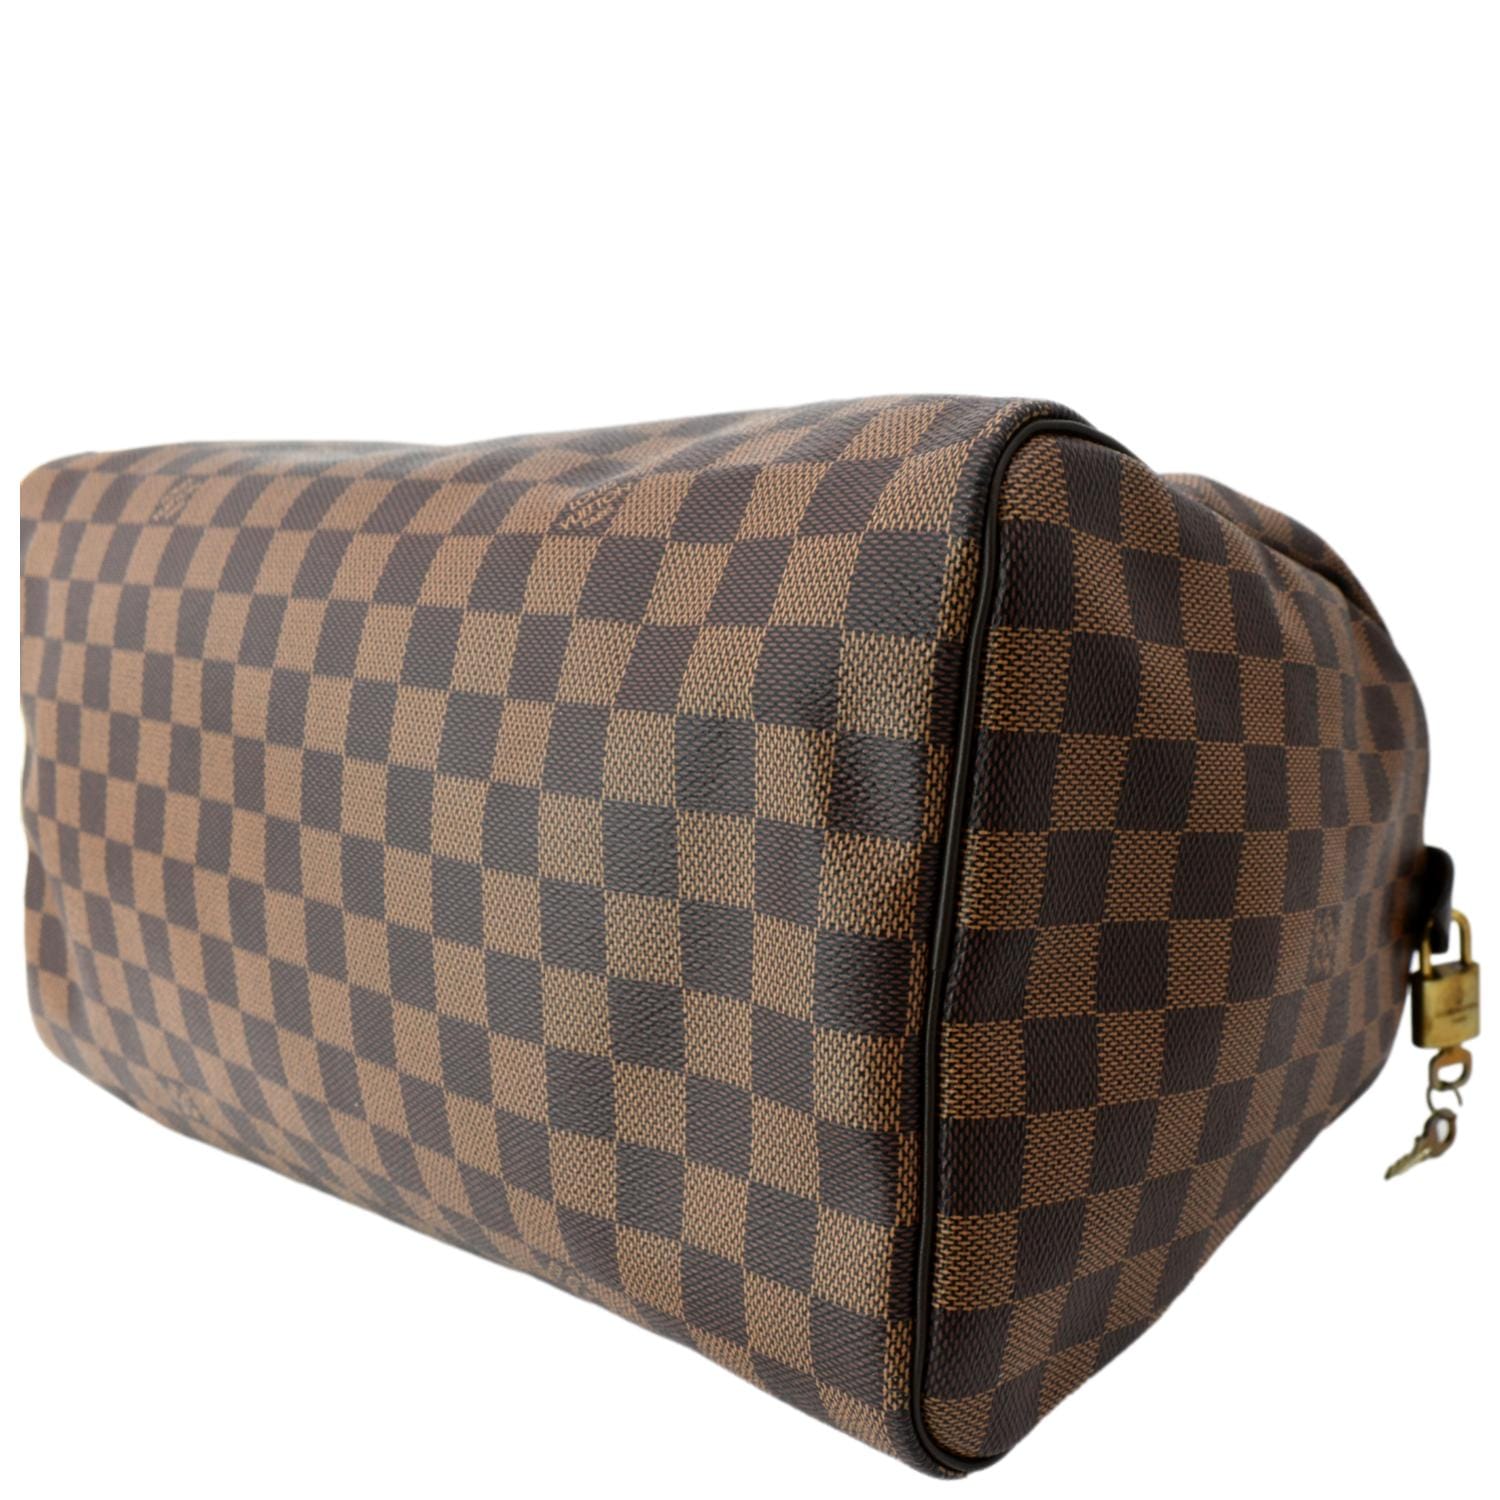 Louis Vuitton Speedy 35 Damier Ebene Satchel Bag